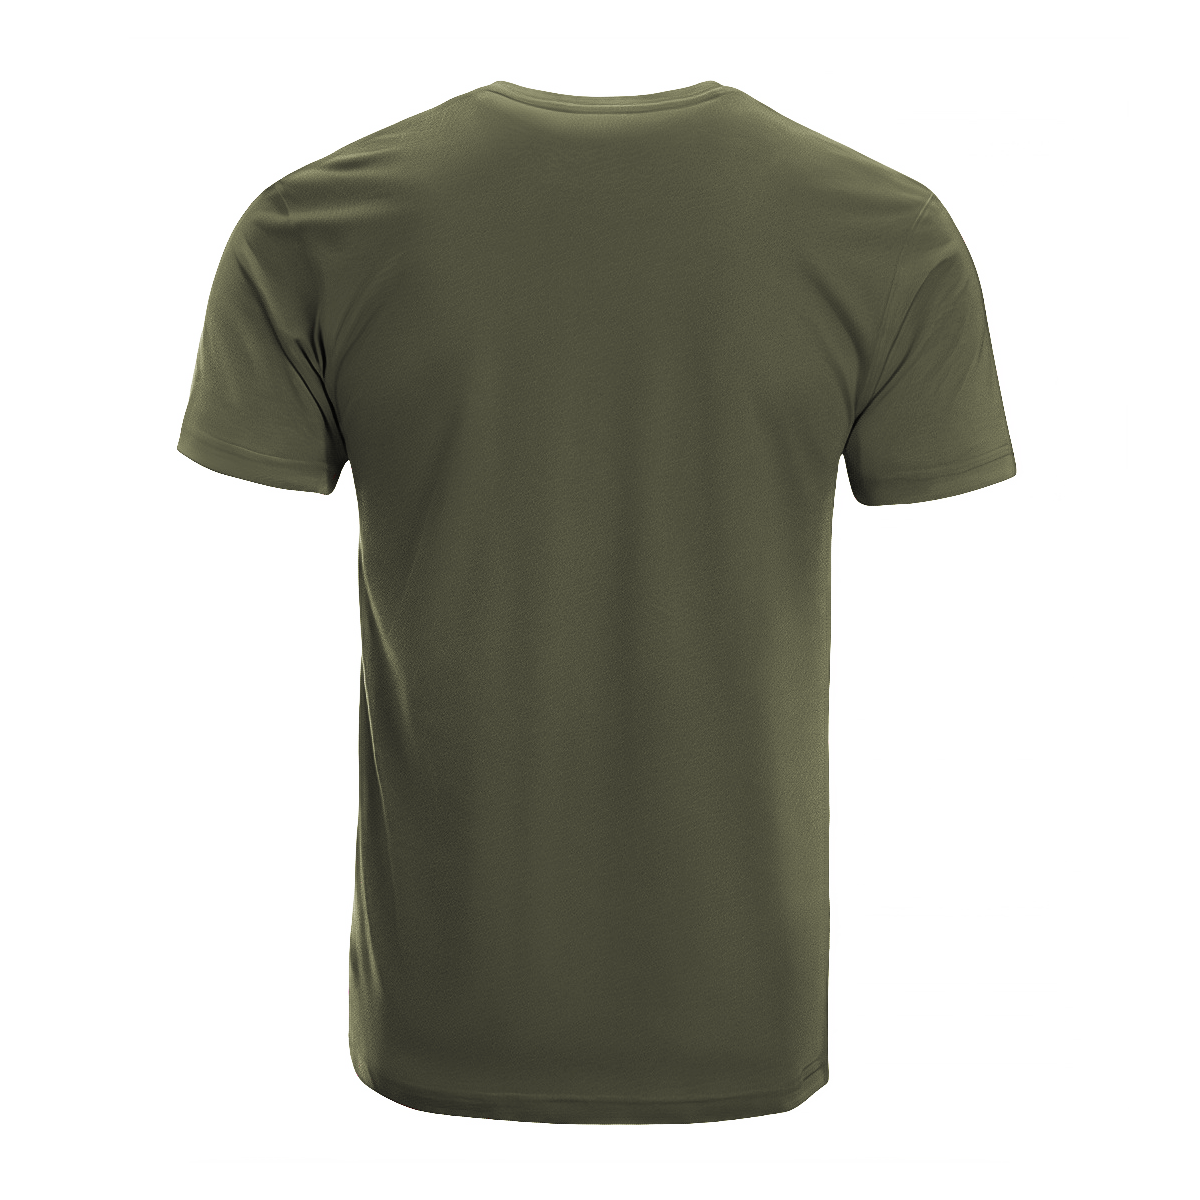 Auchinleck Tartan Crest T-shirt - I'm not yelling style